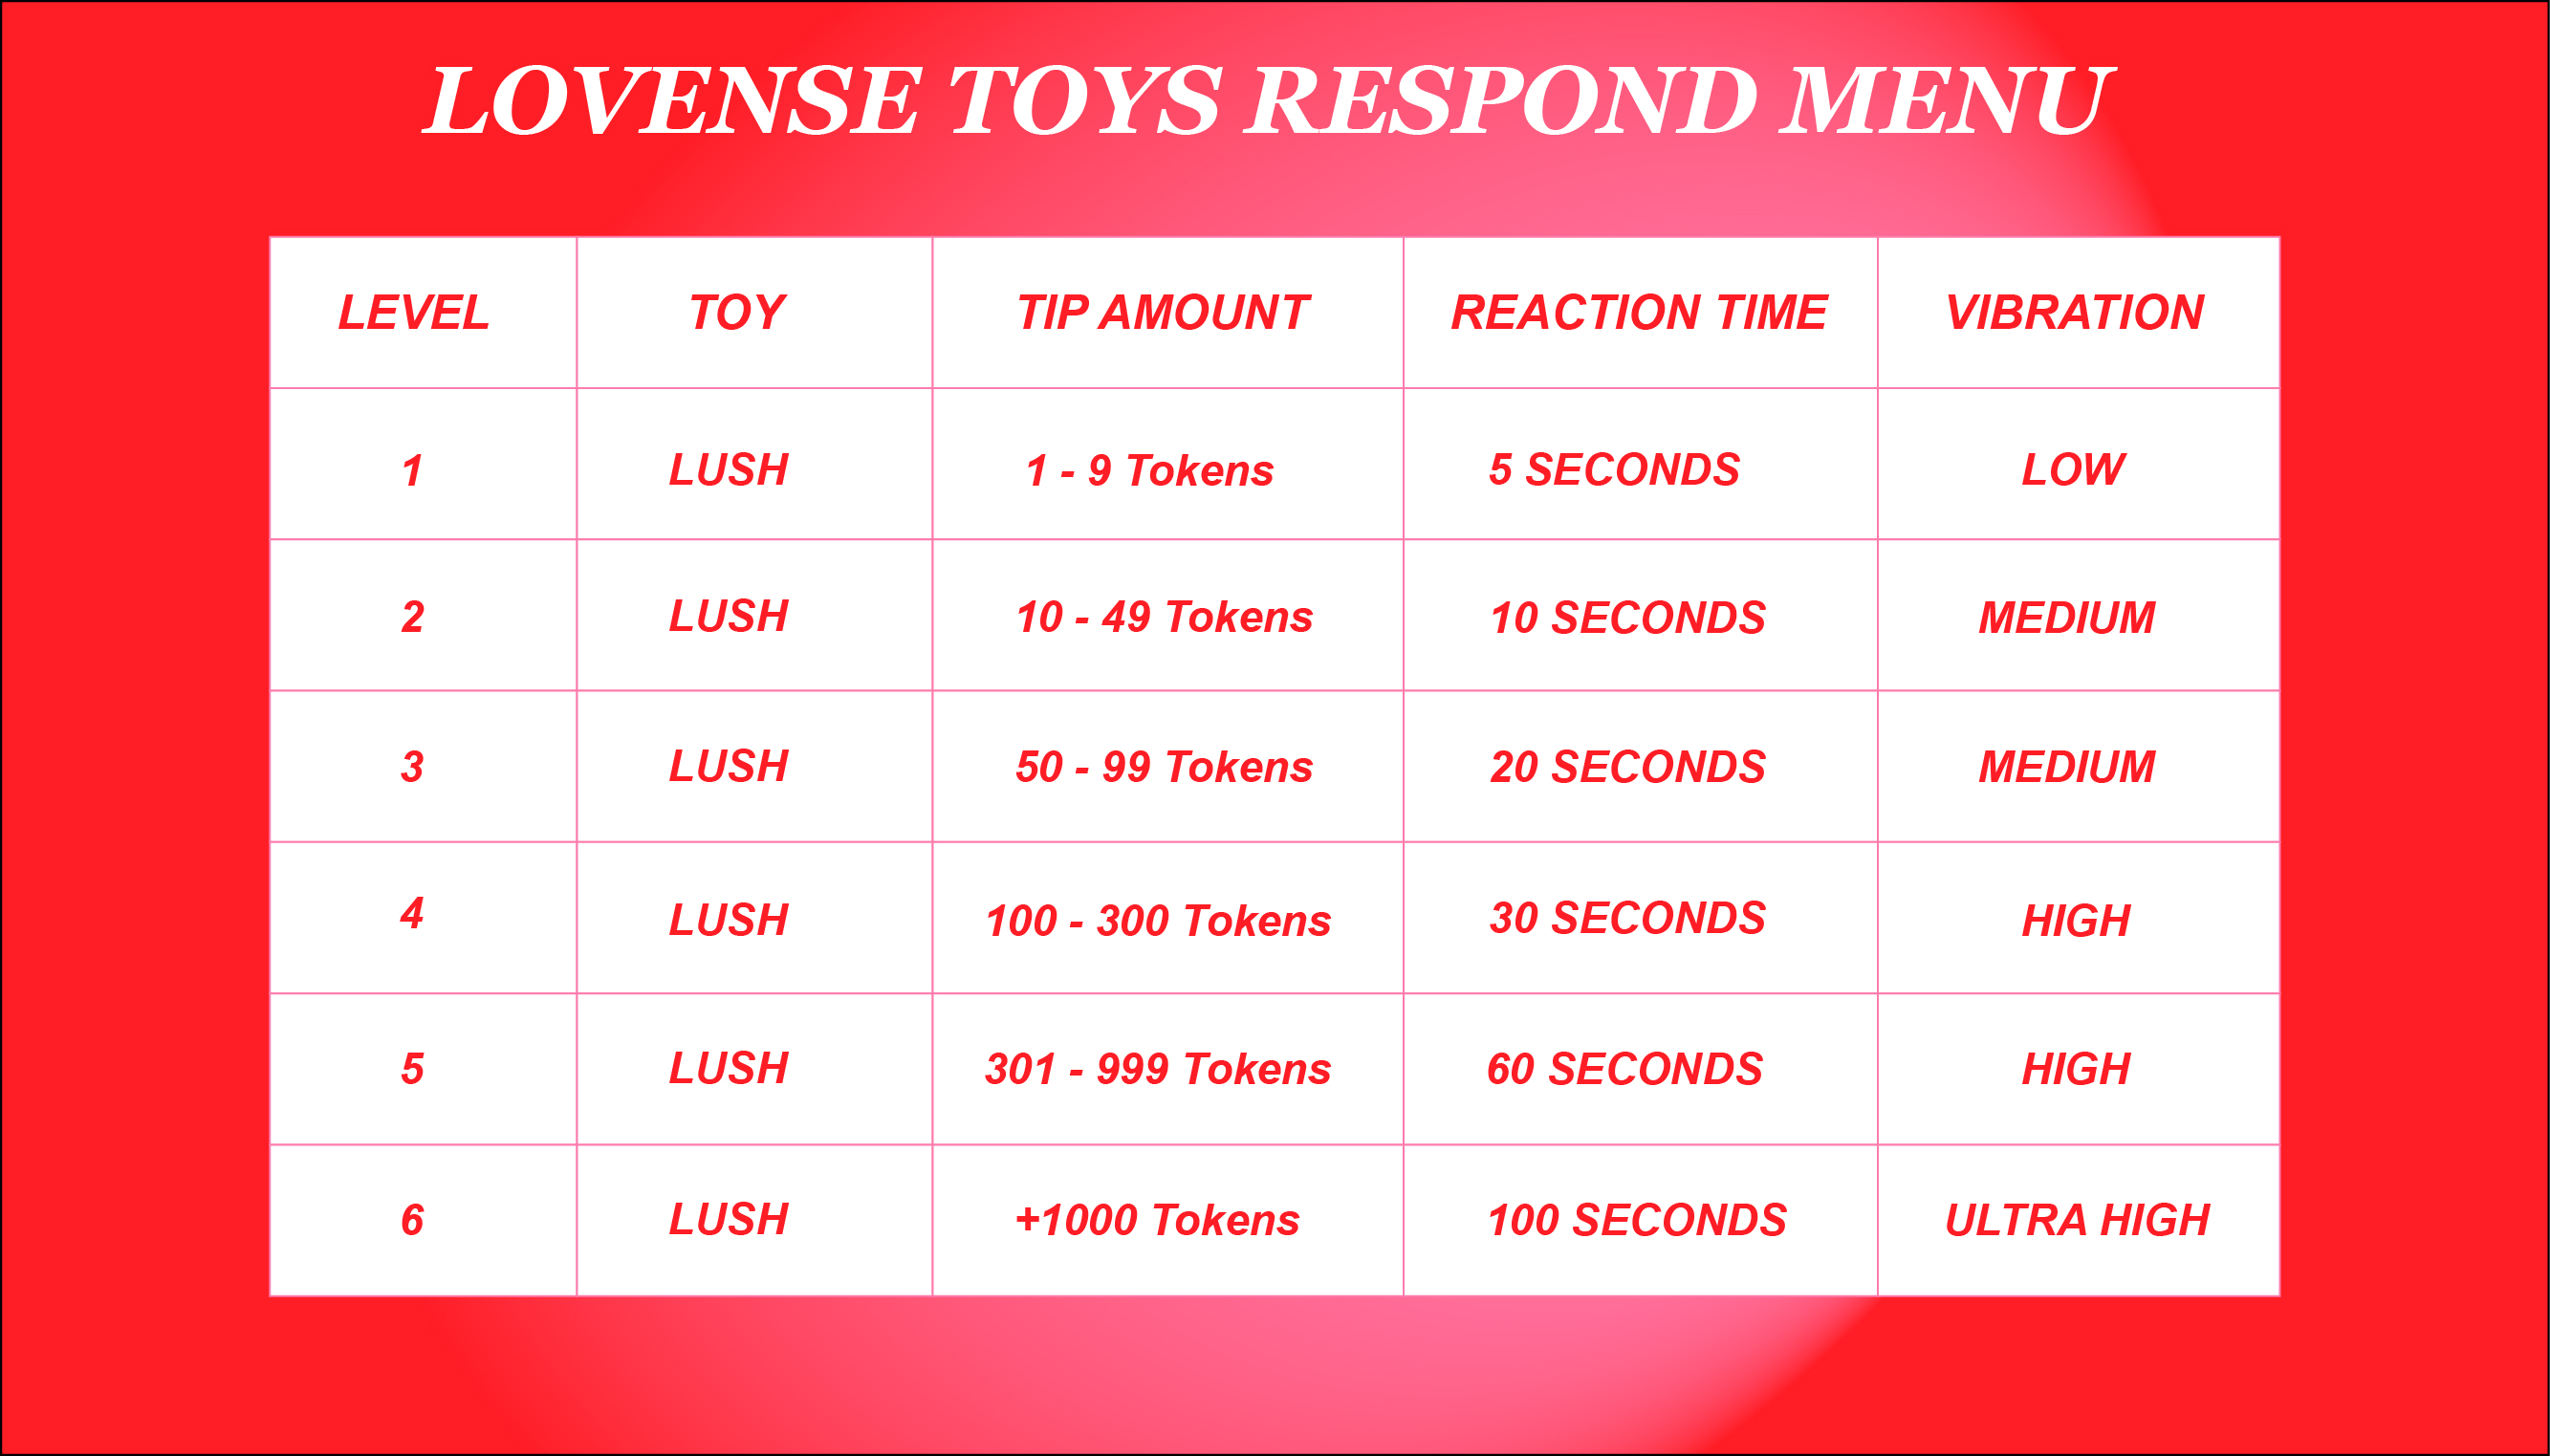 HadeiBrown Lovense Toy Respond Menu image: 1